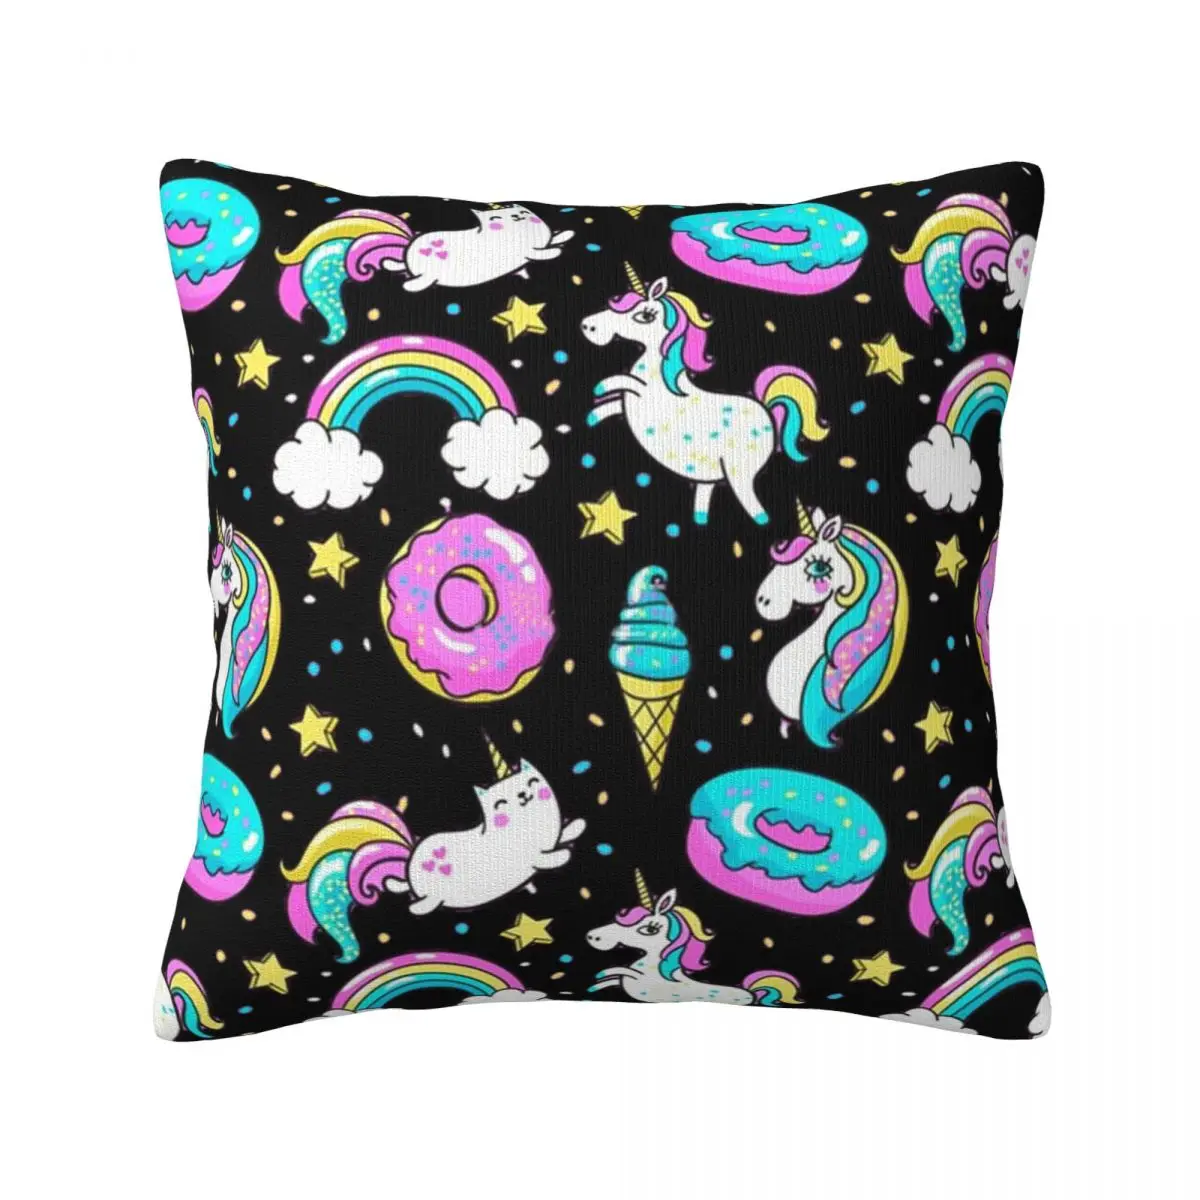 

Rainbow Unicorn Donut Throw Pillow Cover Decorative Pillow Covers Home Pillows Shells Cushion Cover Zippered Pillowcase